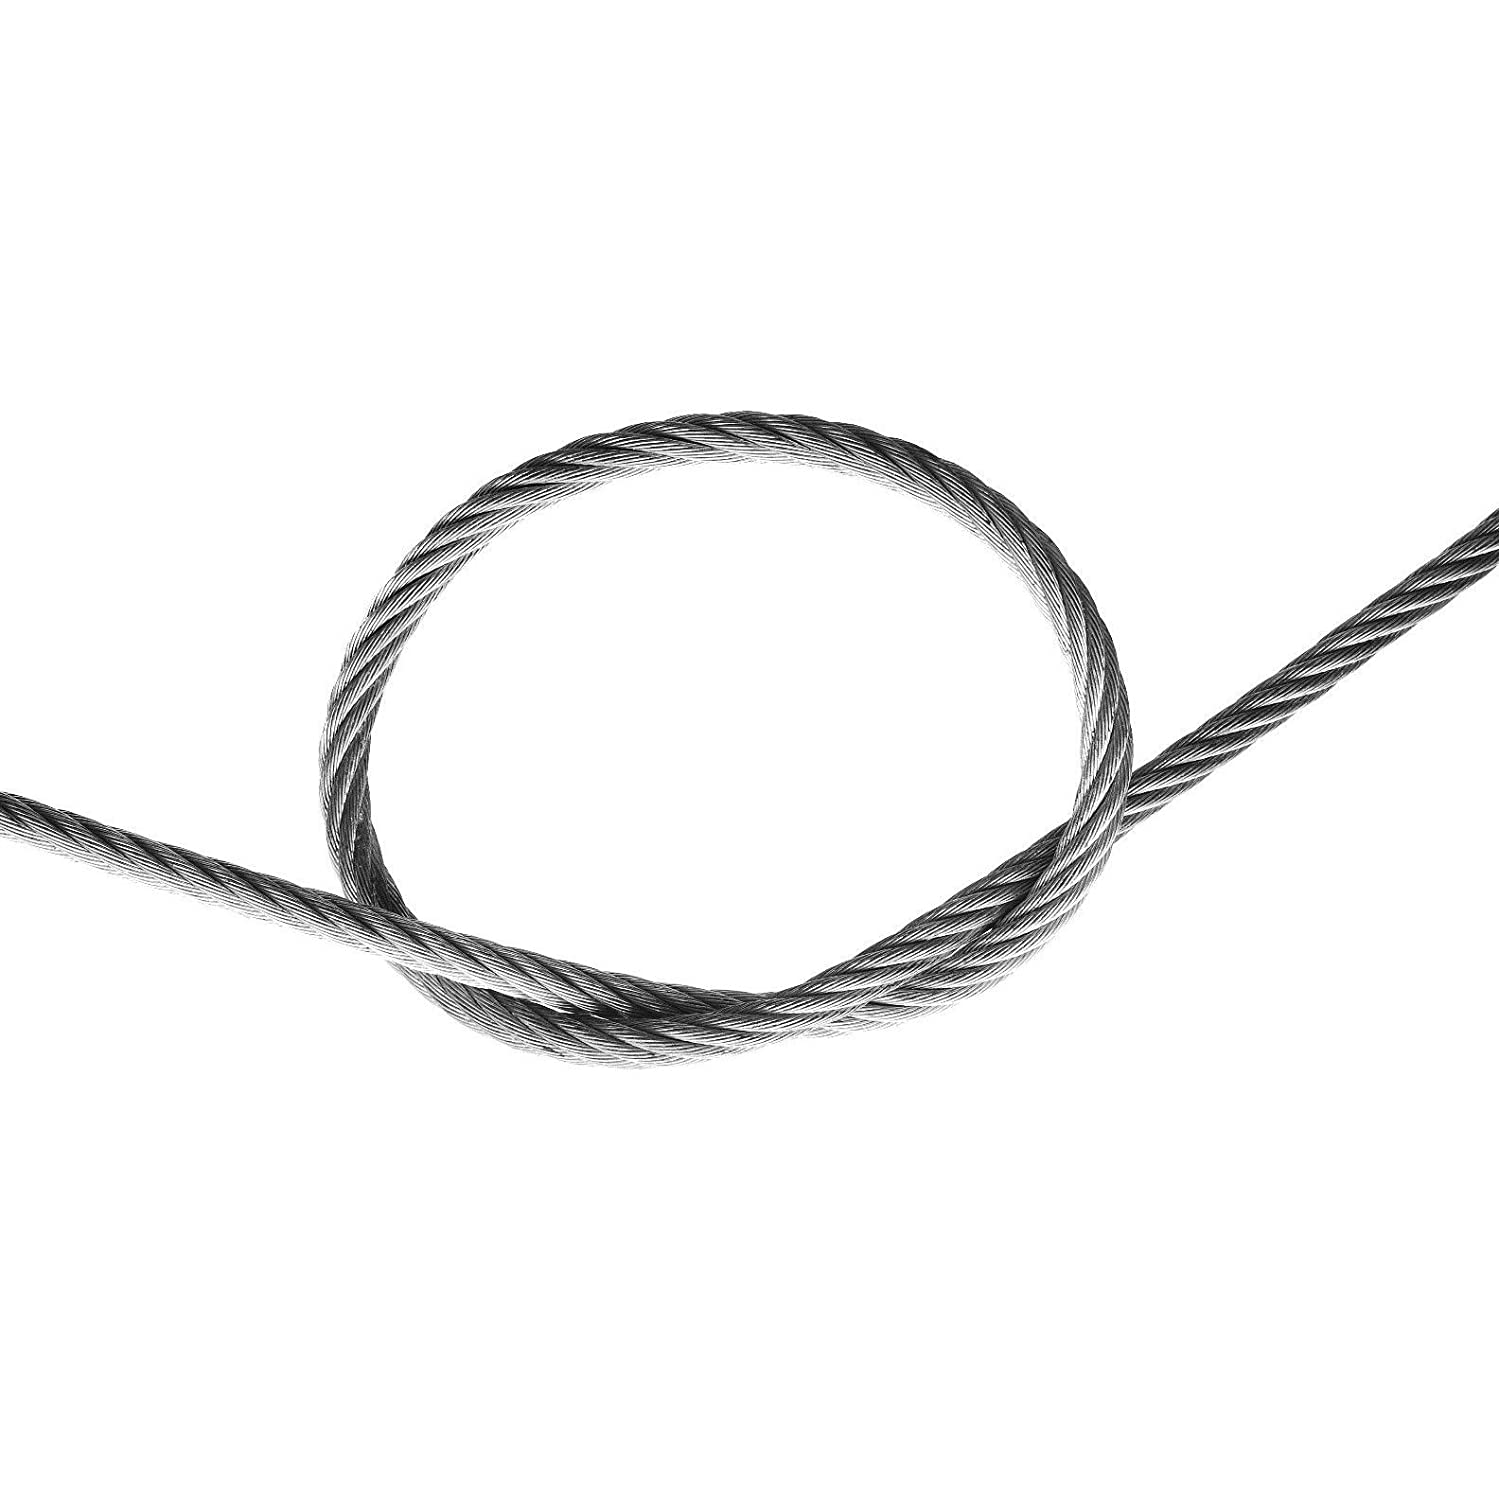 1" 6x25 IWRC Galvanized Wire Rope